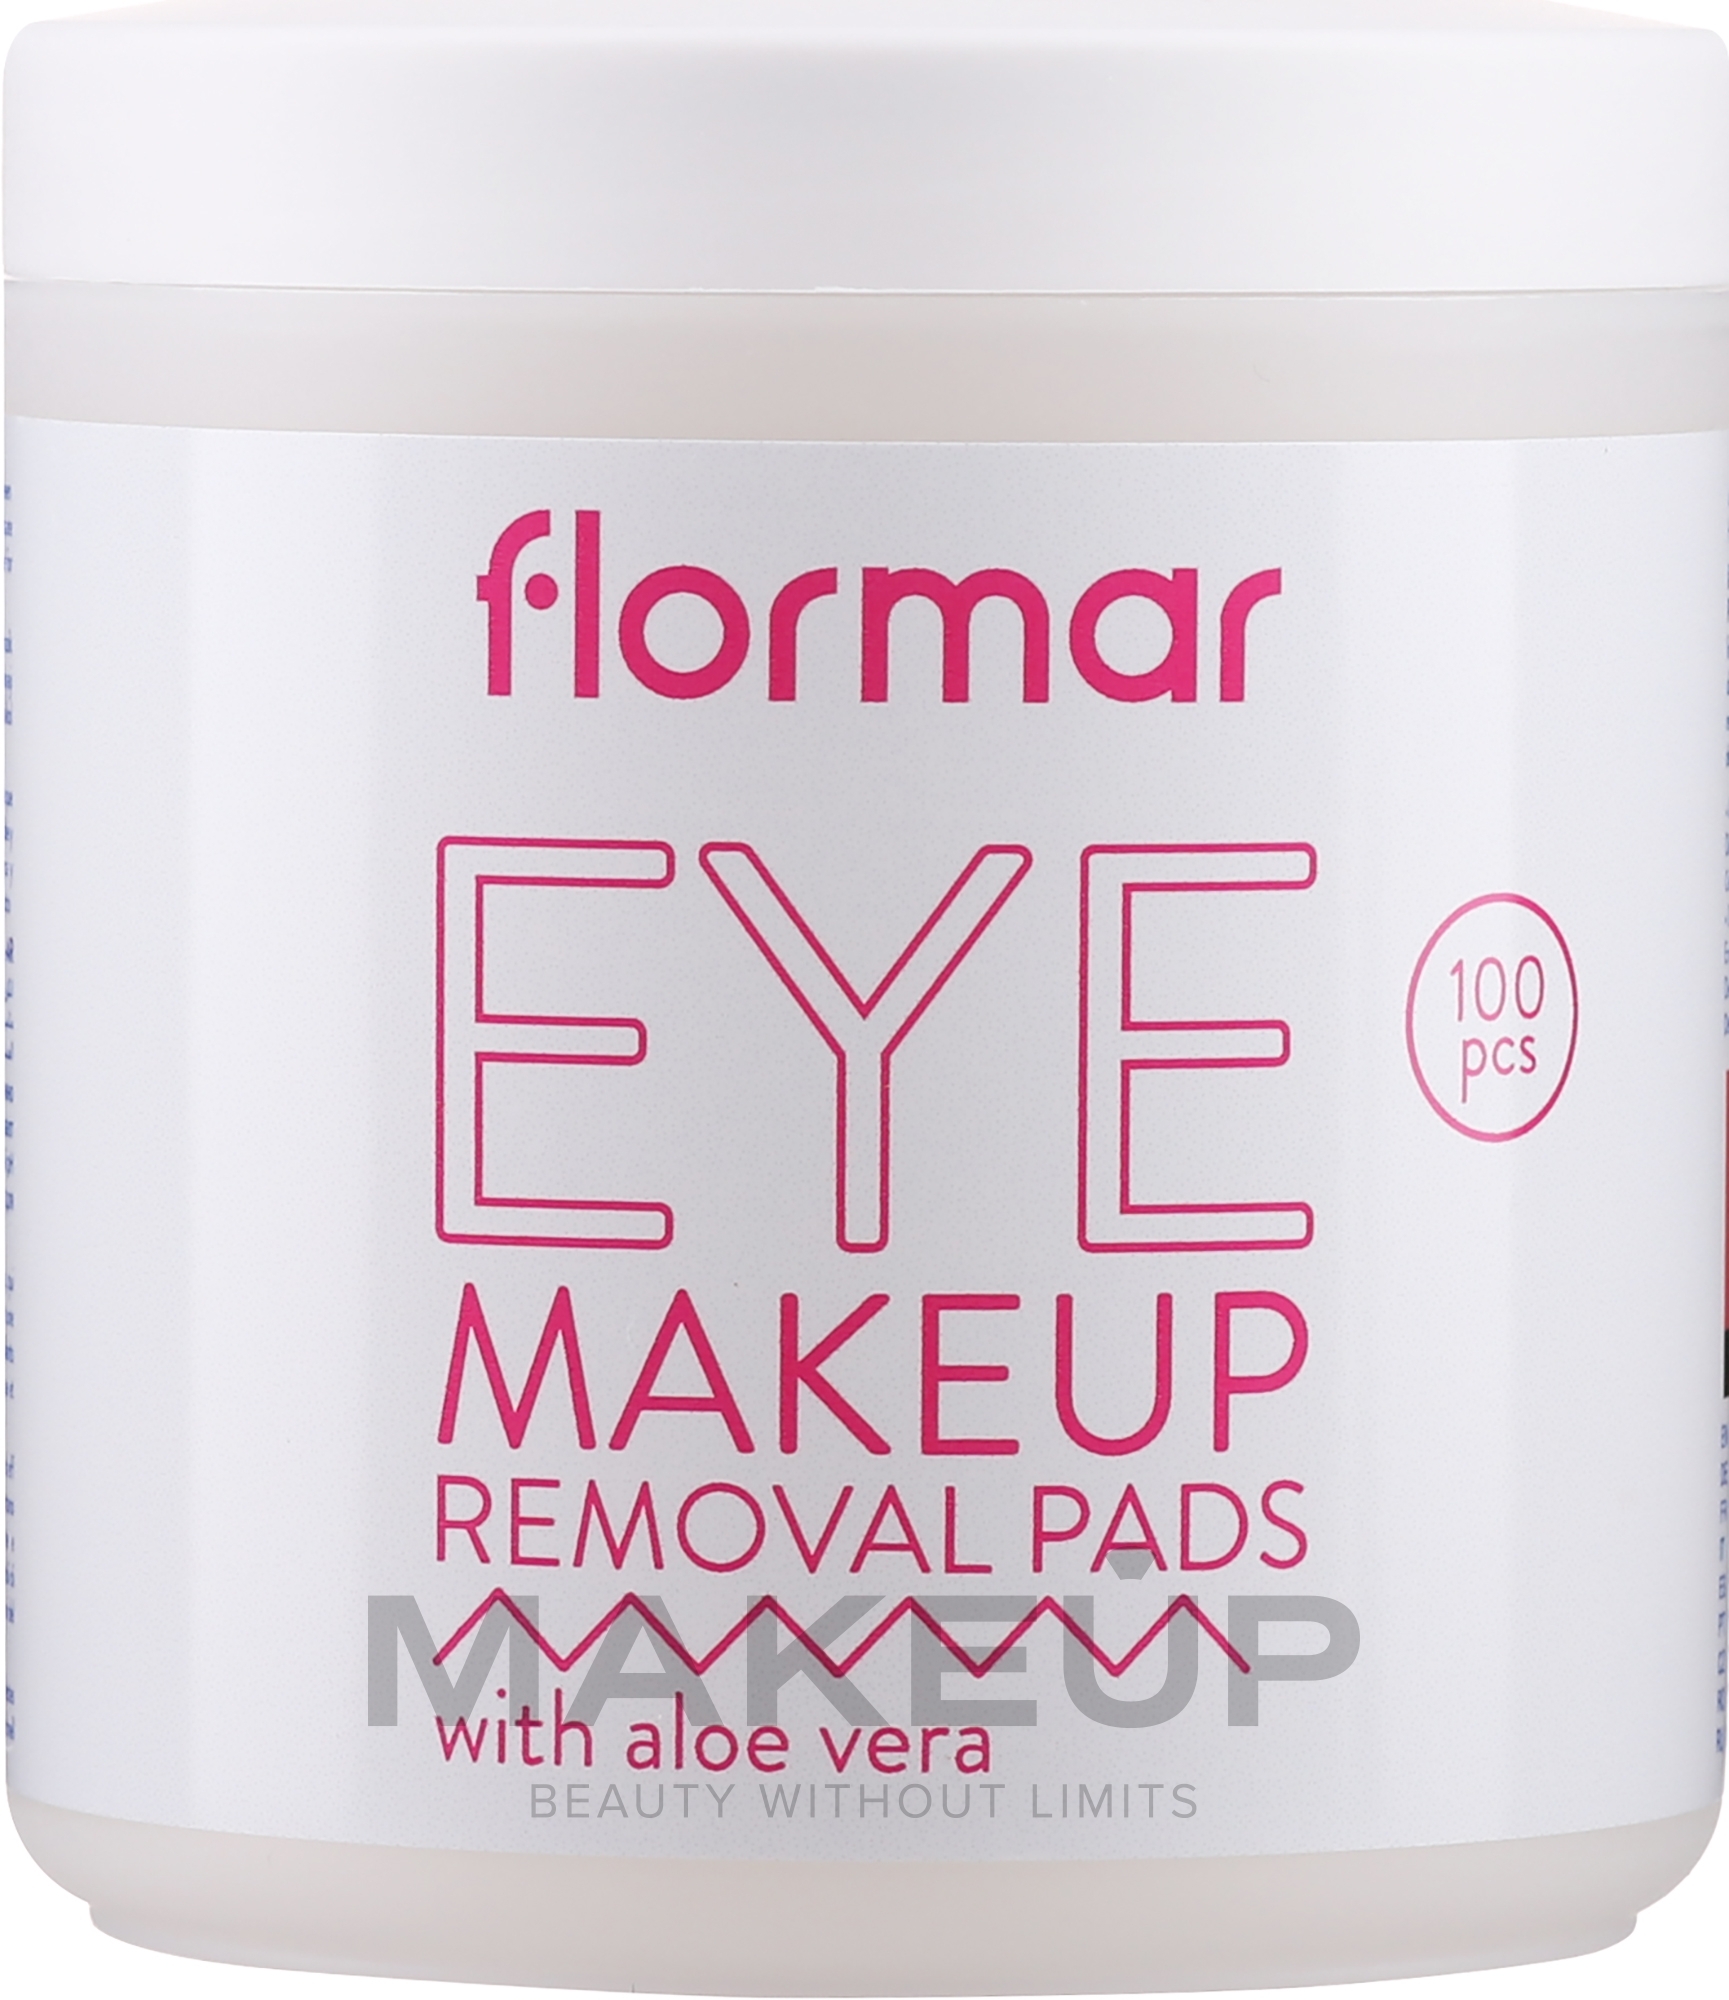 Abschminkpads mit Aloe Vera - Flormar Eye Make-Up Removal Pads with Aloe-Vera — Bild 100 St.